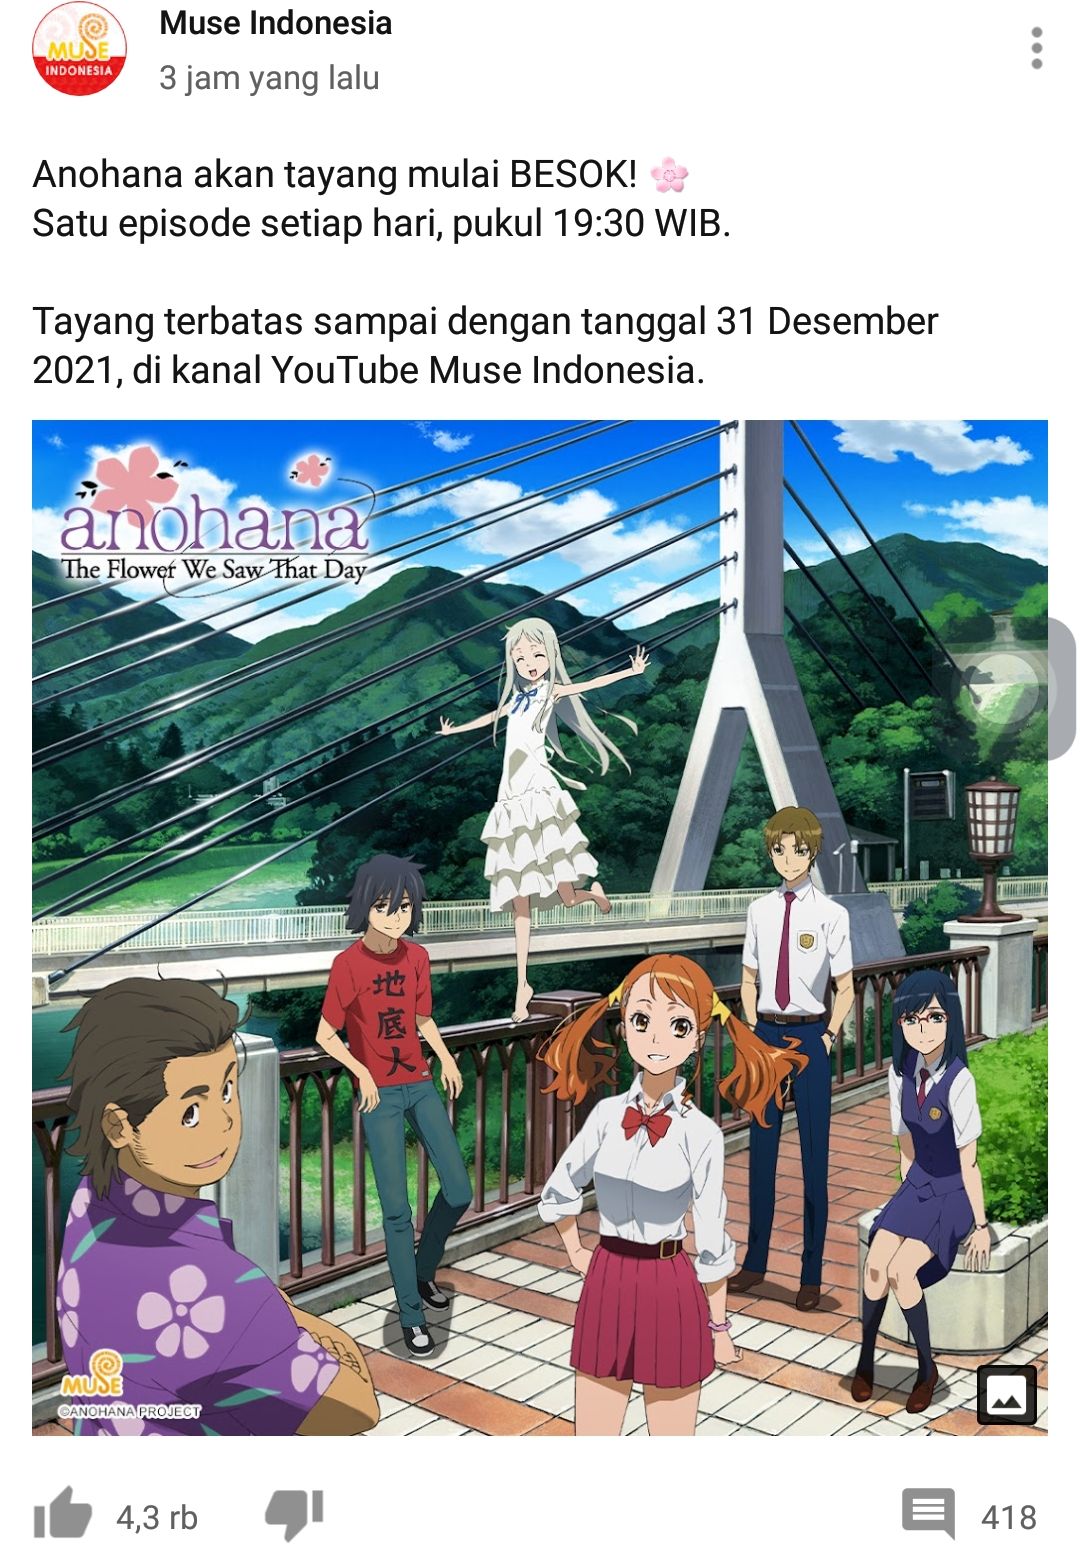 Pengumuman Muse Indonesia mengenai penayangan anime Anohana.